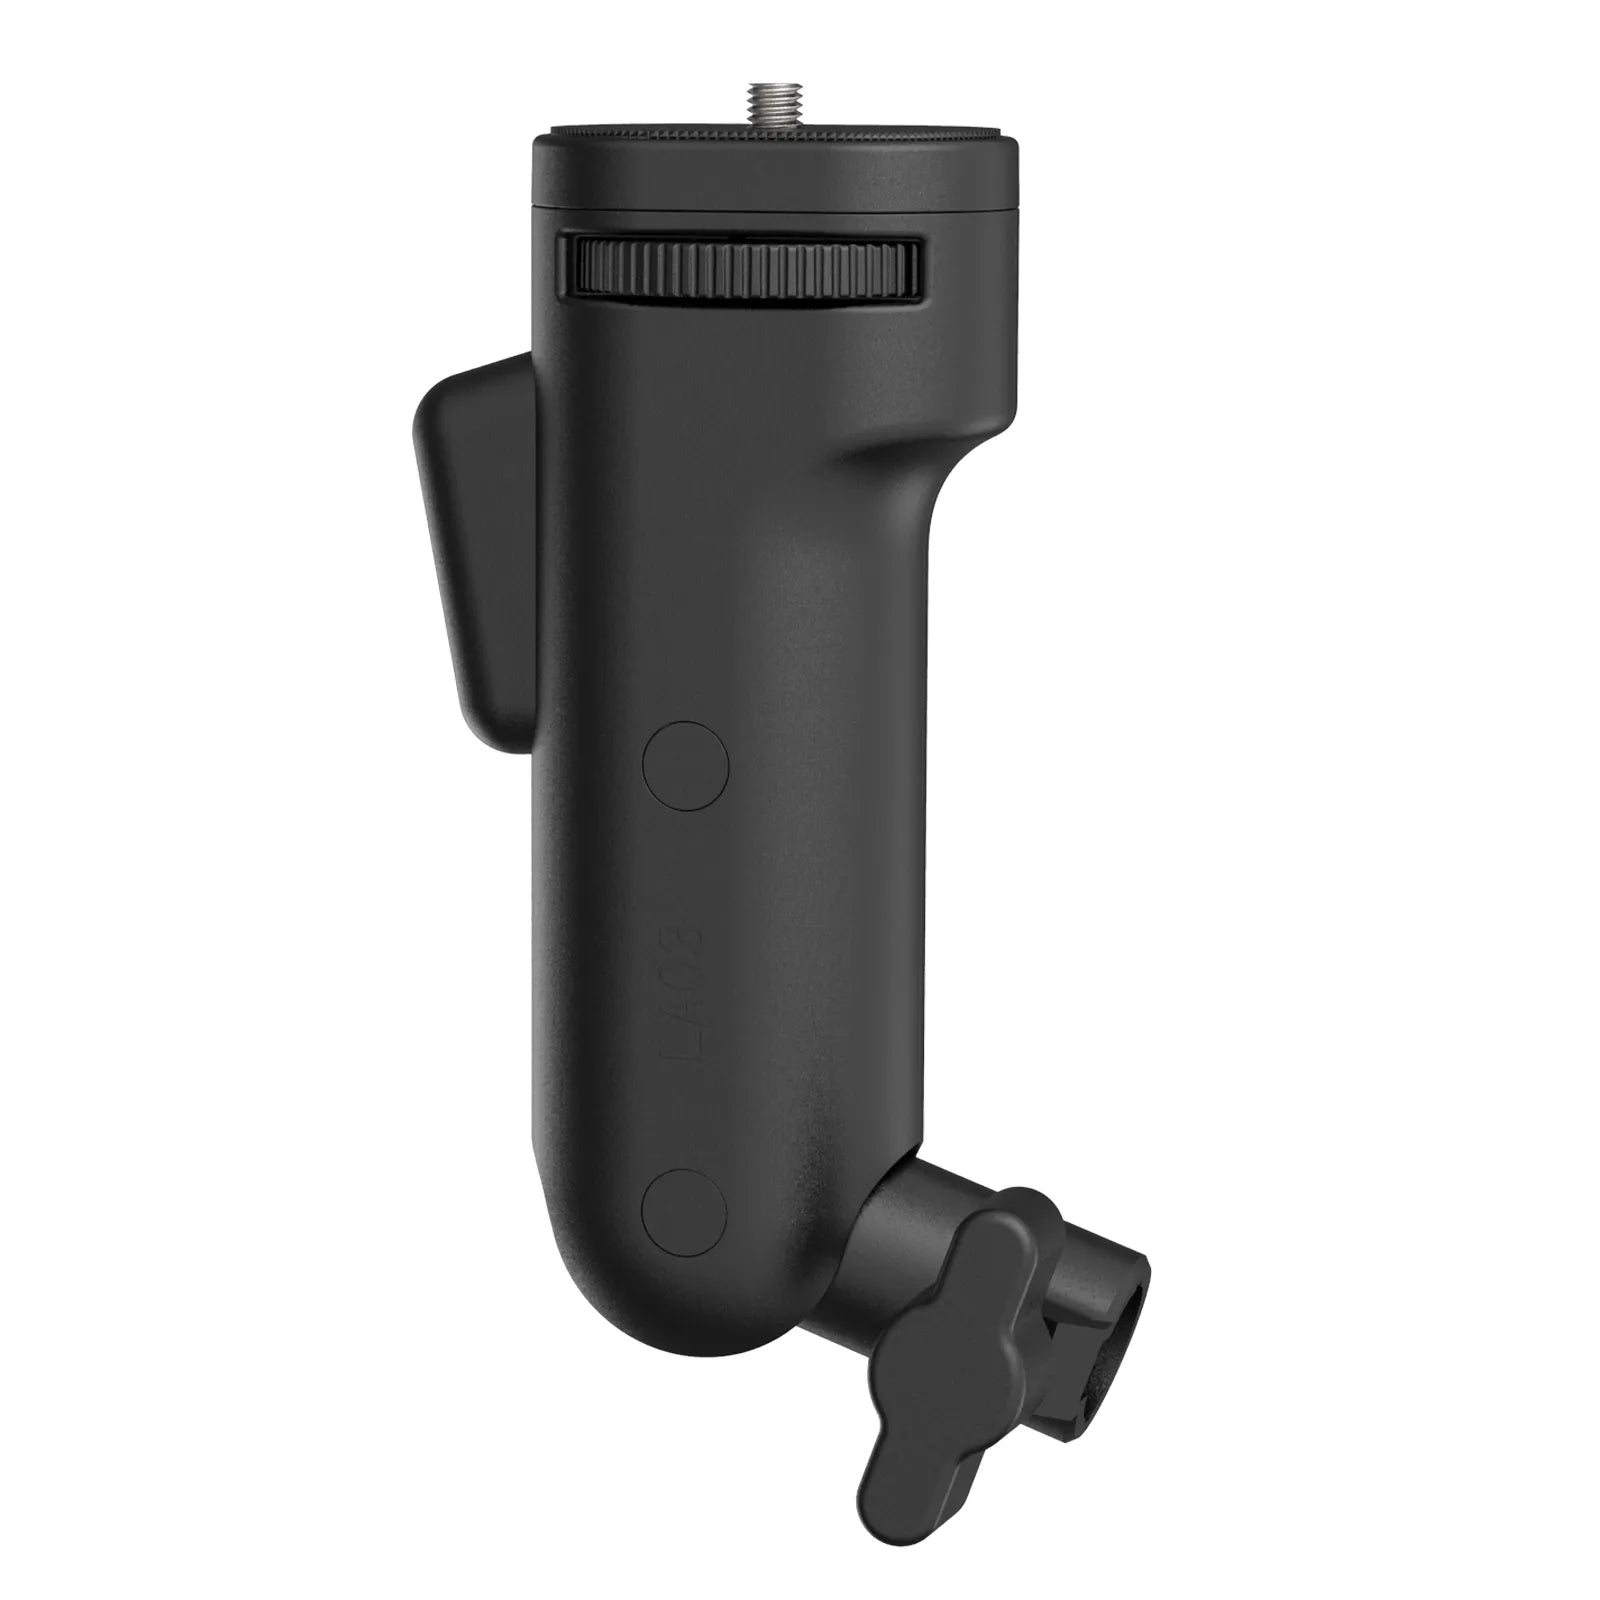 Ulanzi LA03 Universal Light Stand Adapter with Pistol Handle Grip